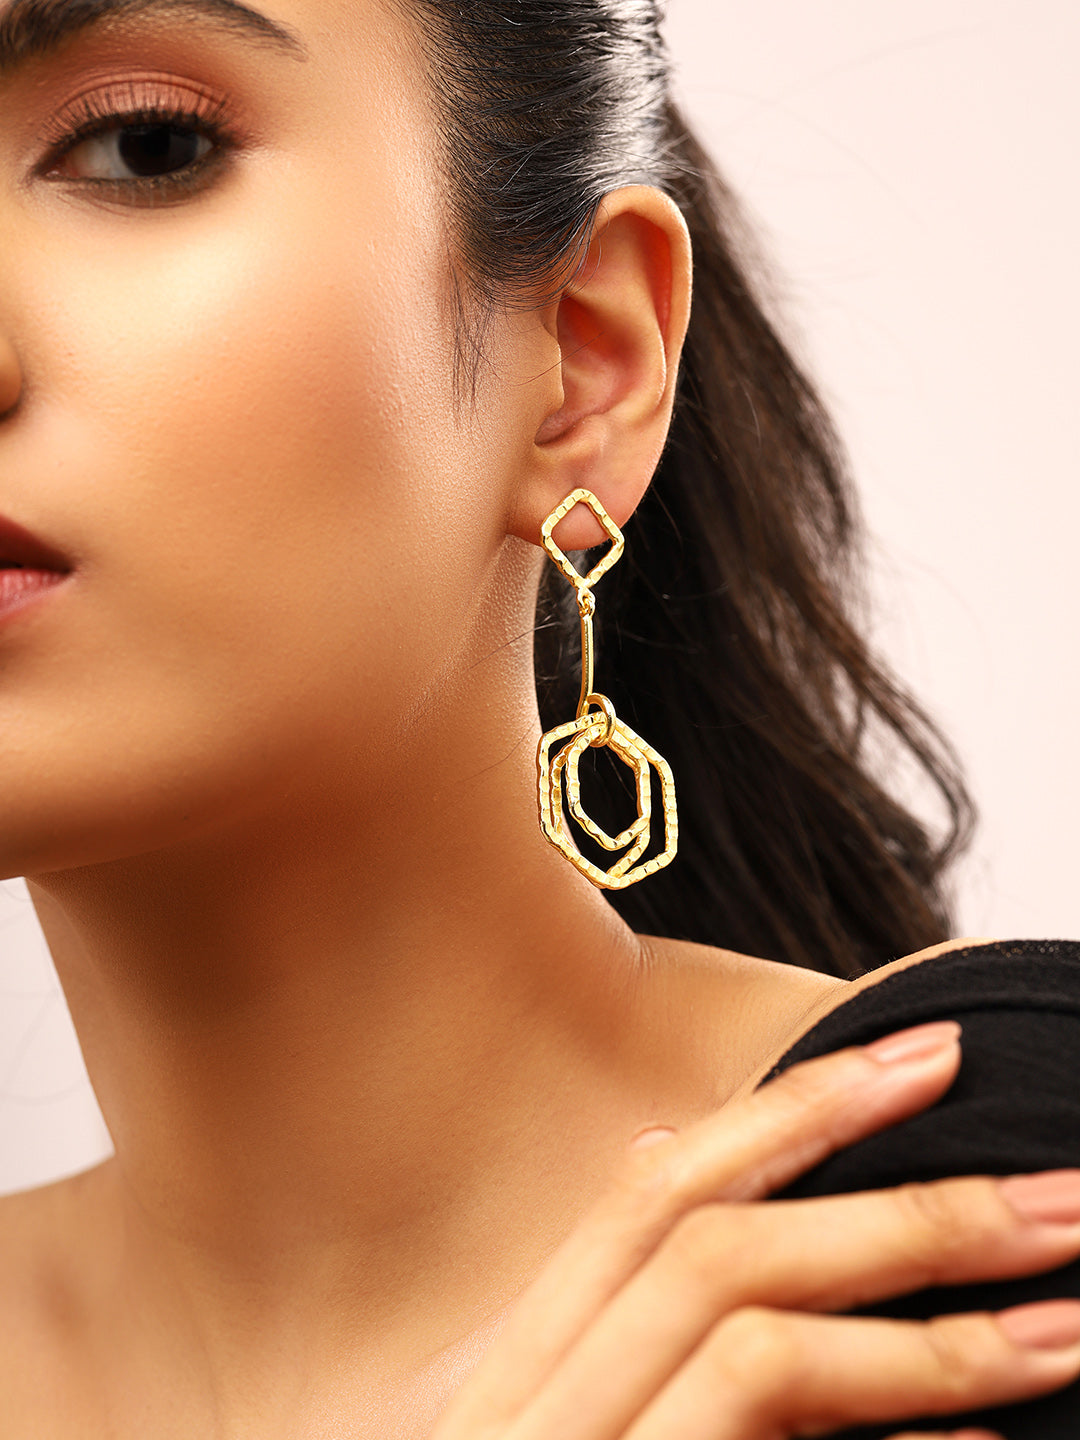 Priyaasi Geometric Shaped Gold Plated Drop Earrings